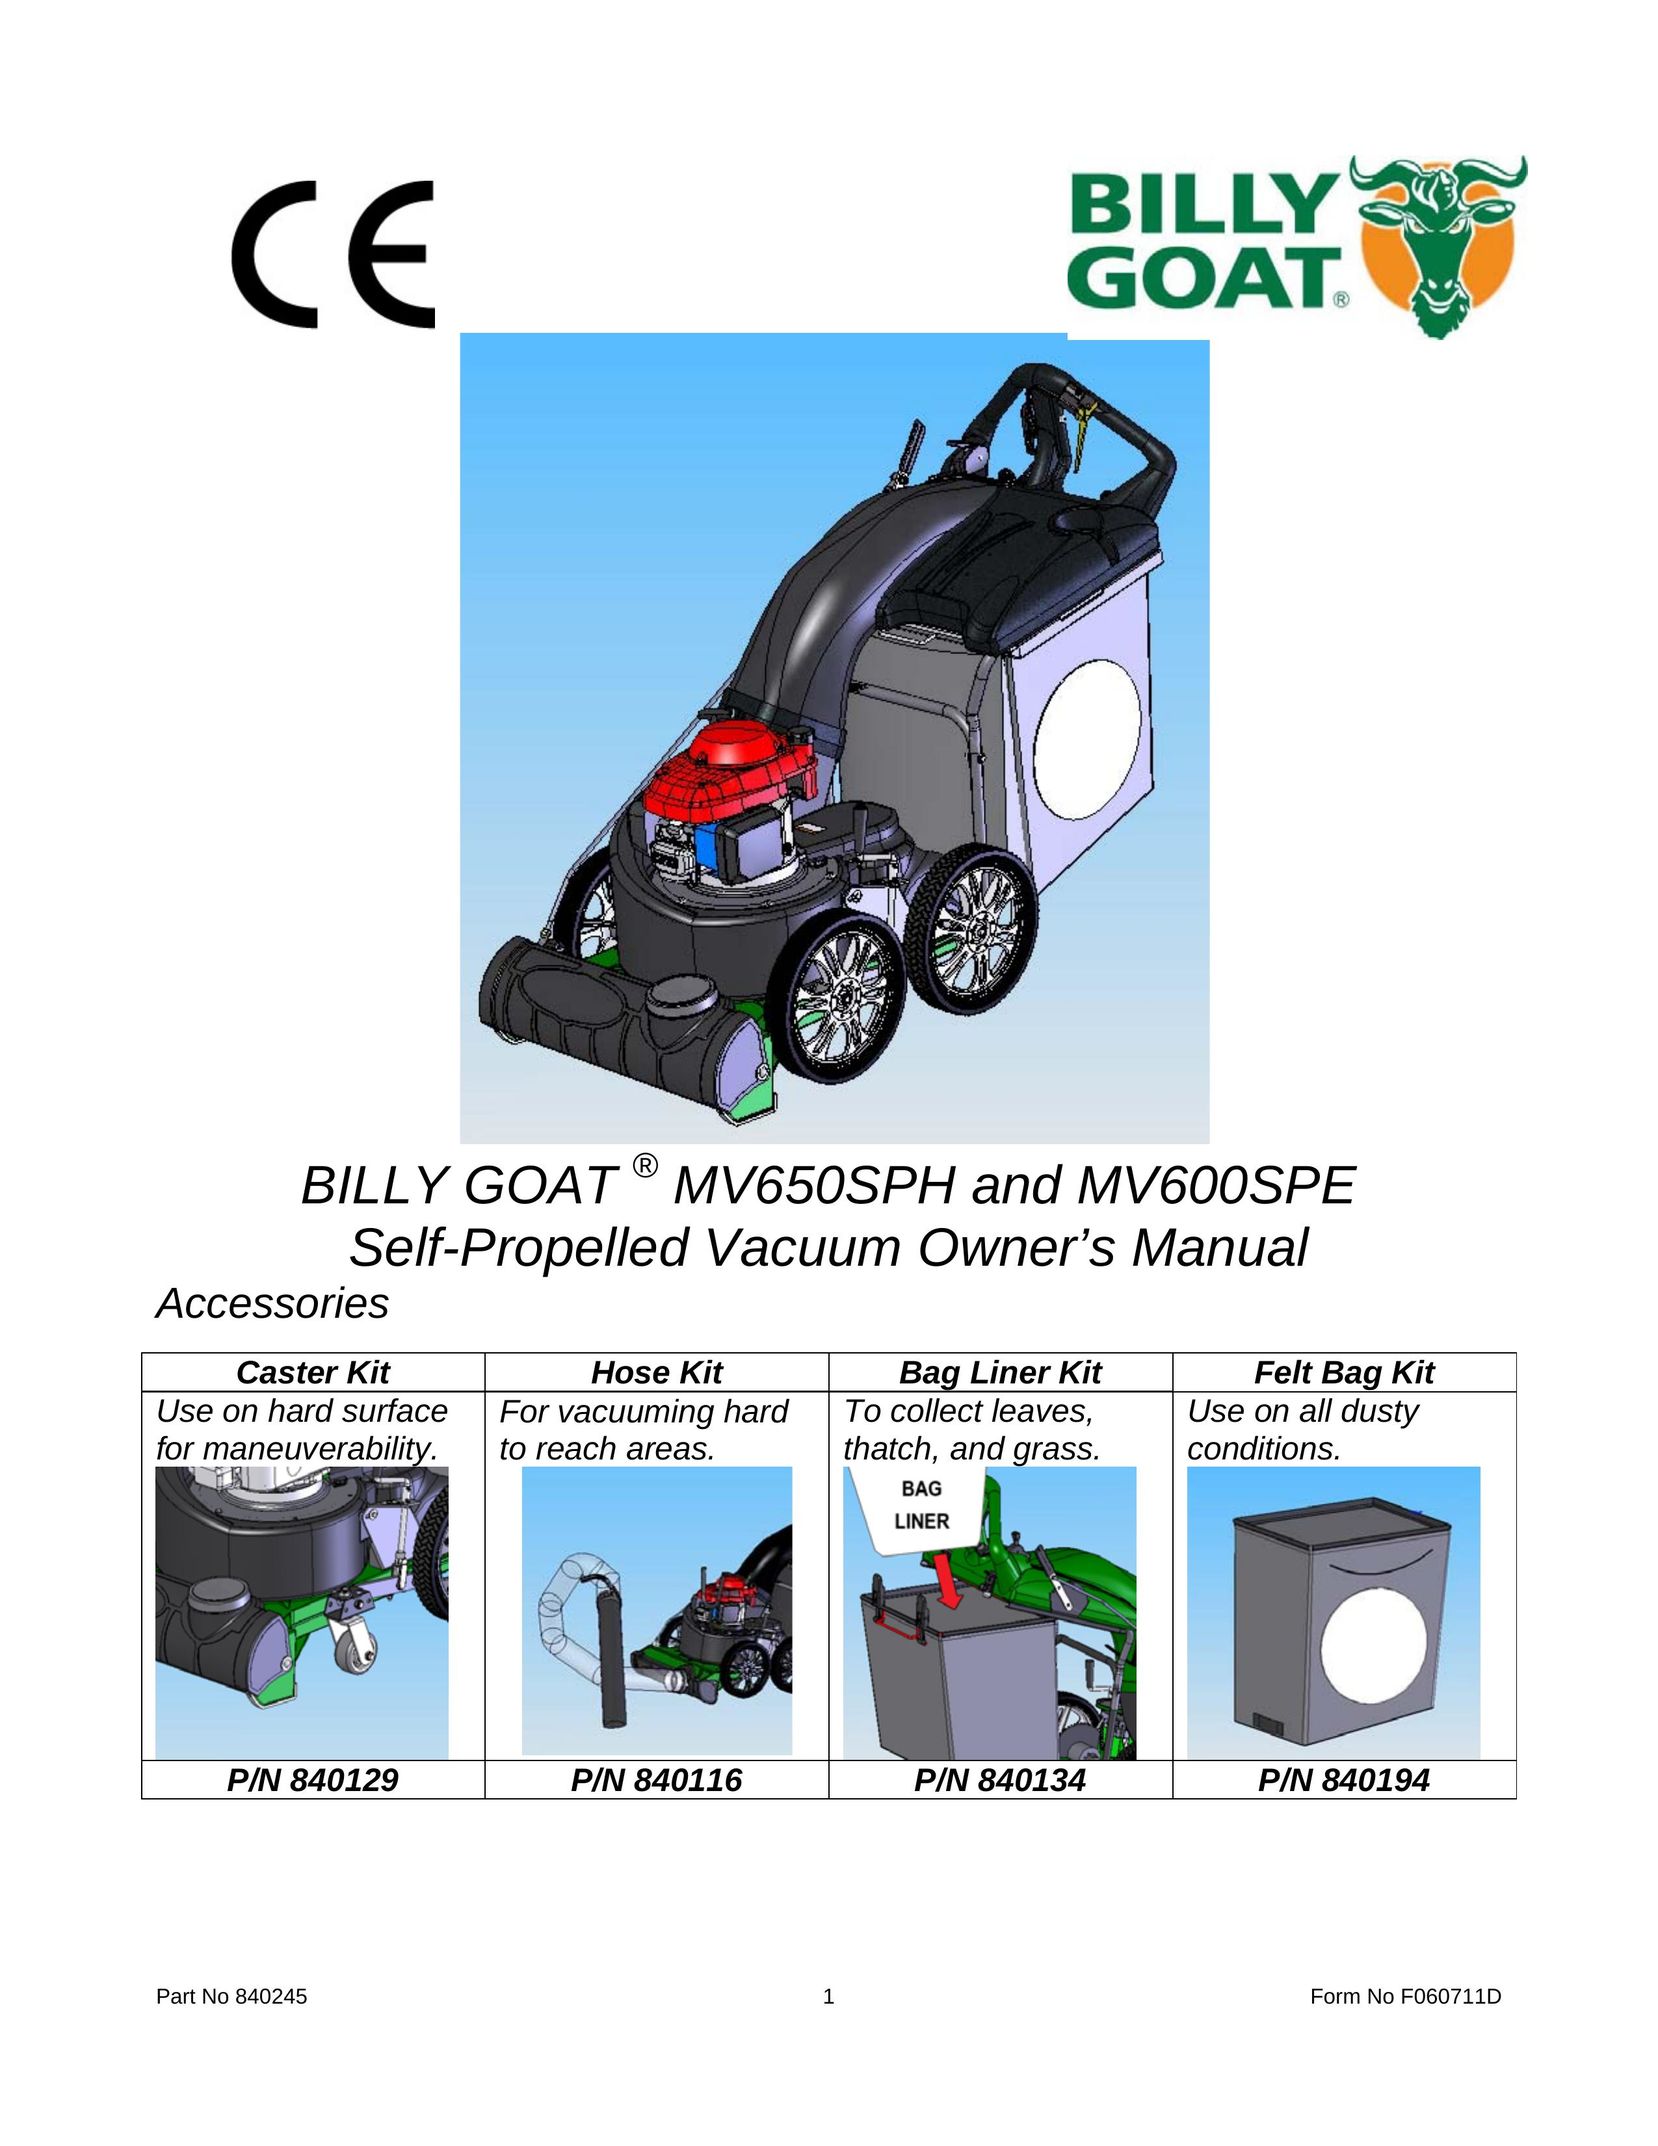 Billy Goat MV600SPE Vacuum Cleaner User Manual